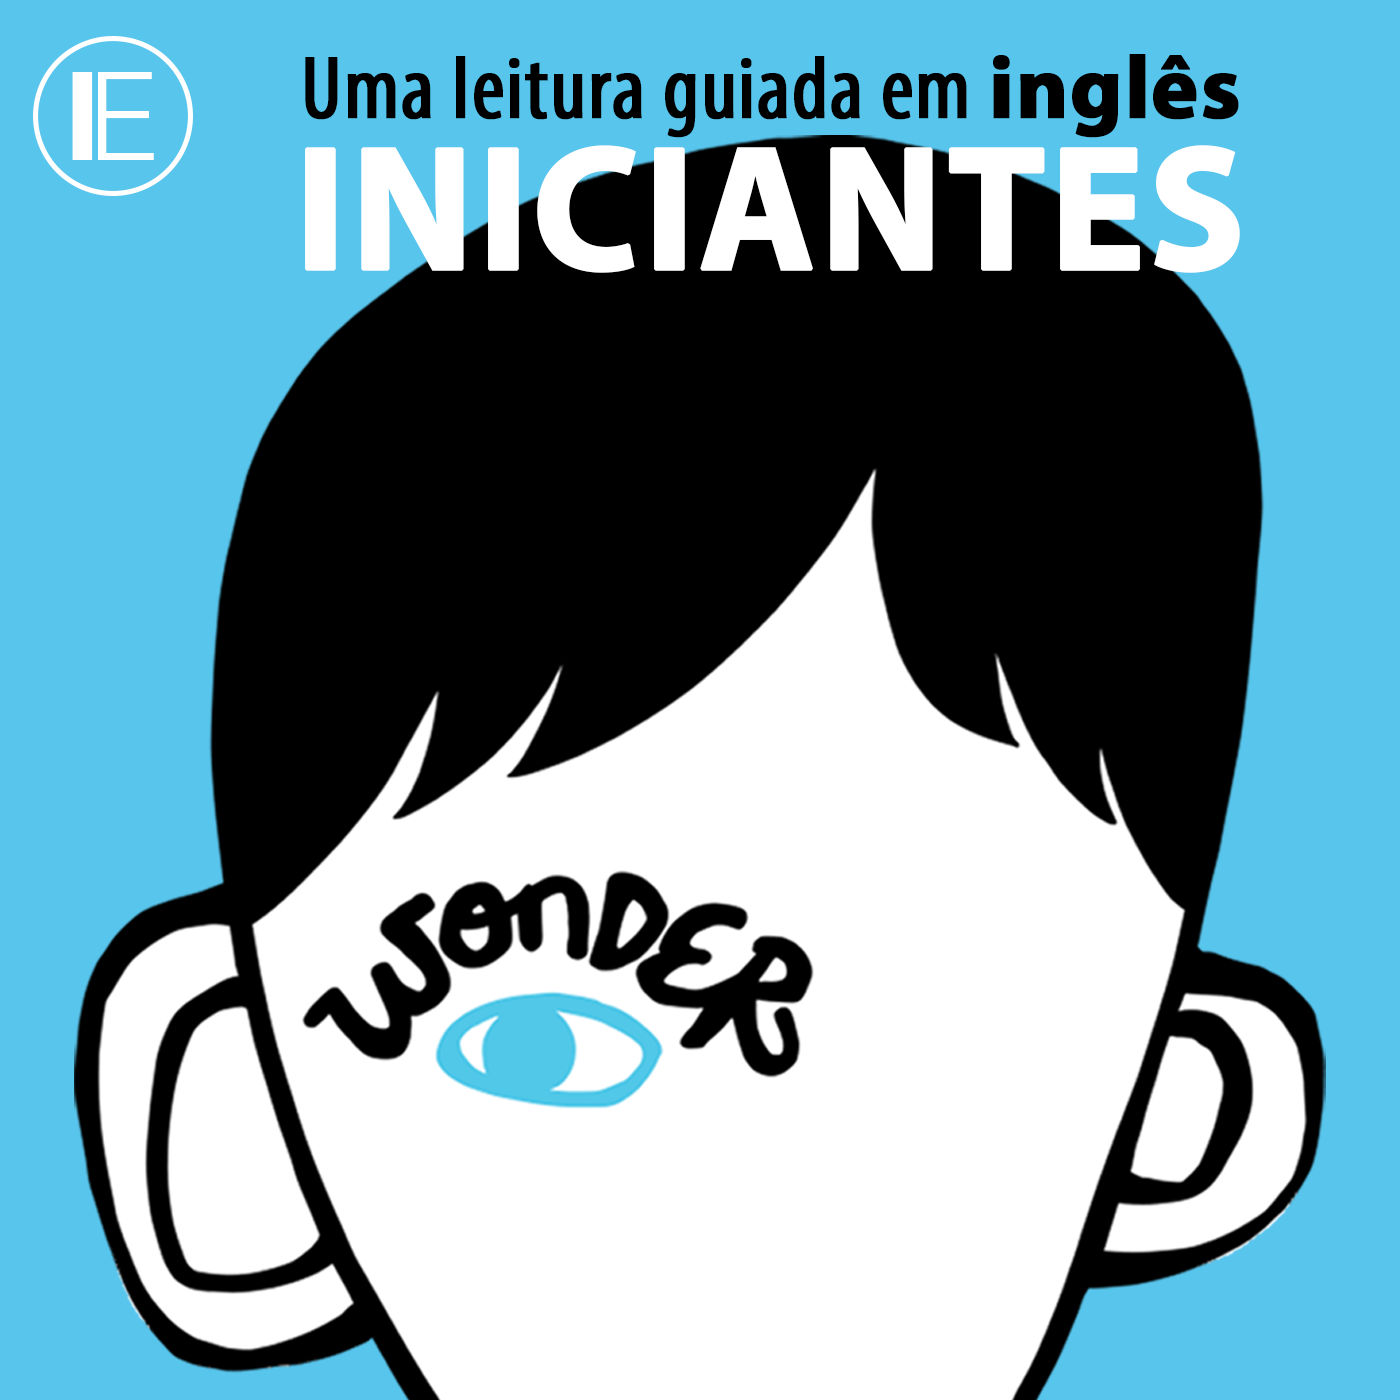 Uncategorized — Aulas Inglês Essencial — INGLÊS ESSENCIAL 2.0